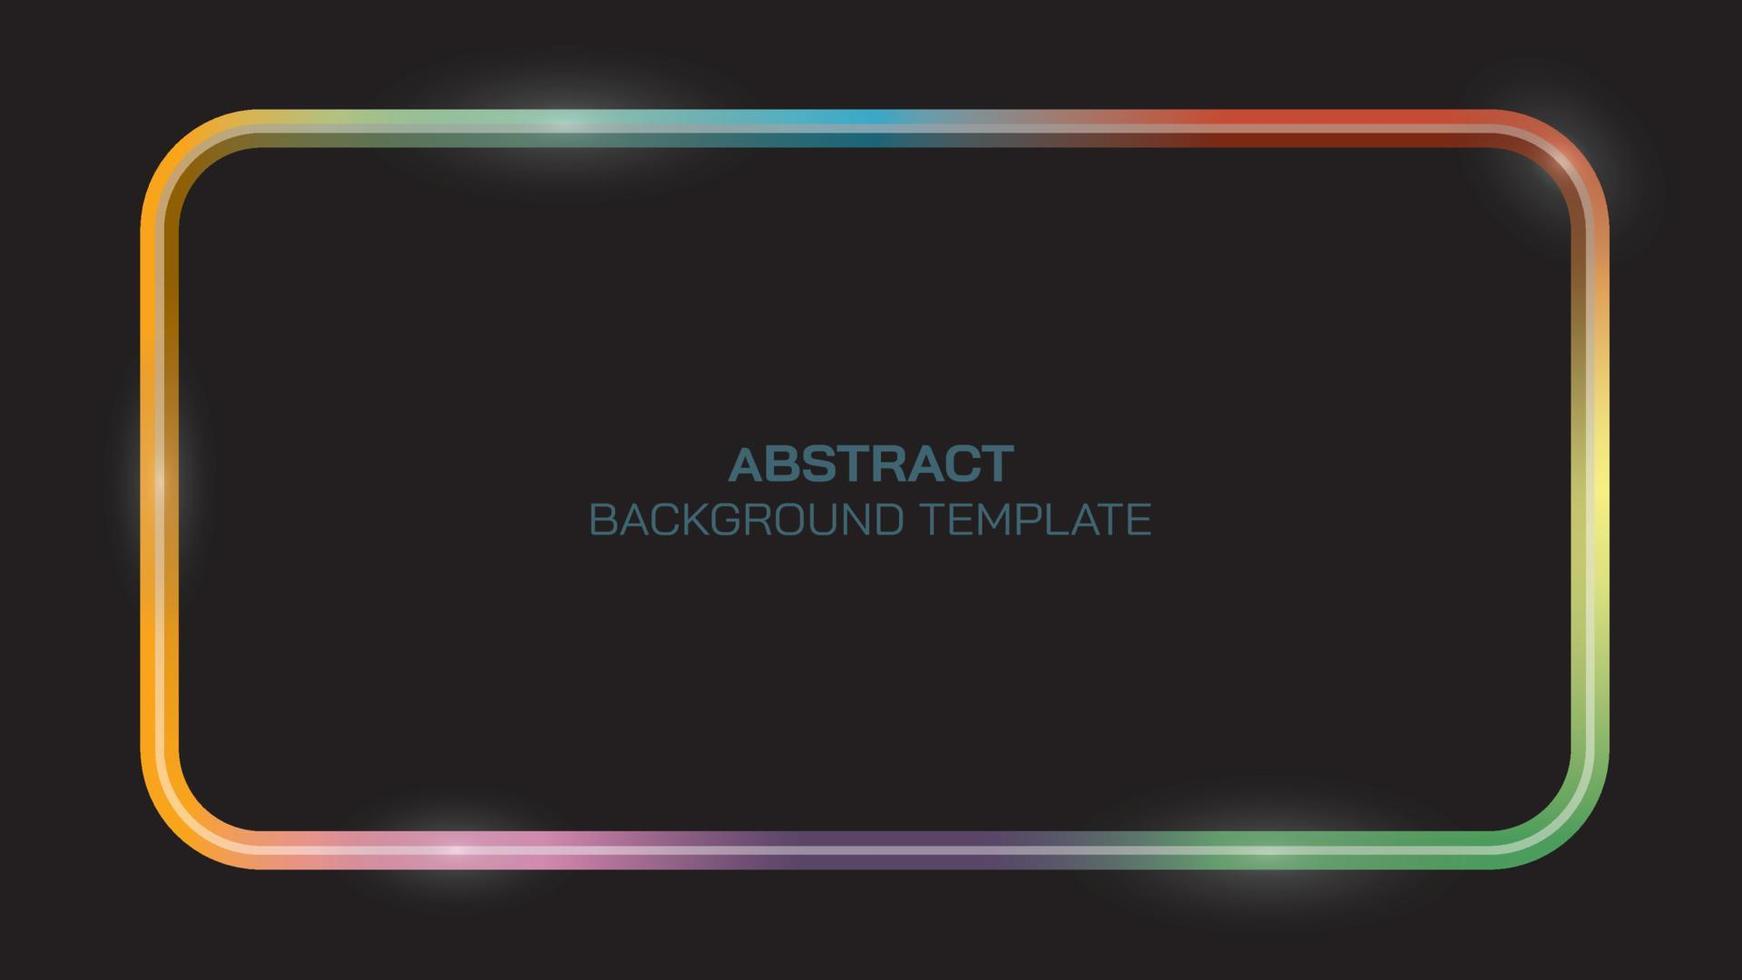 marco rectangular de metal colorido con plantilla de efectos brillantes sobre fondo negro. vector